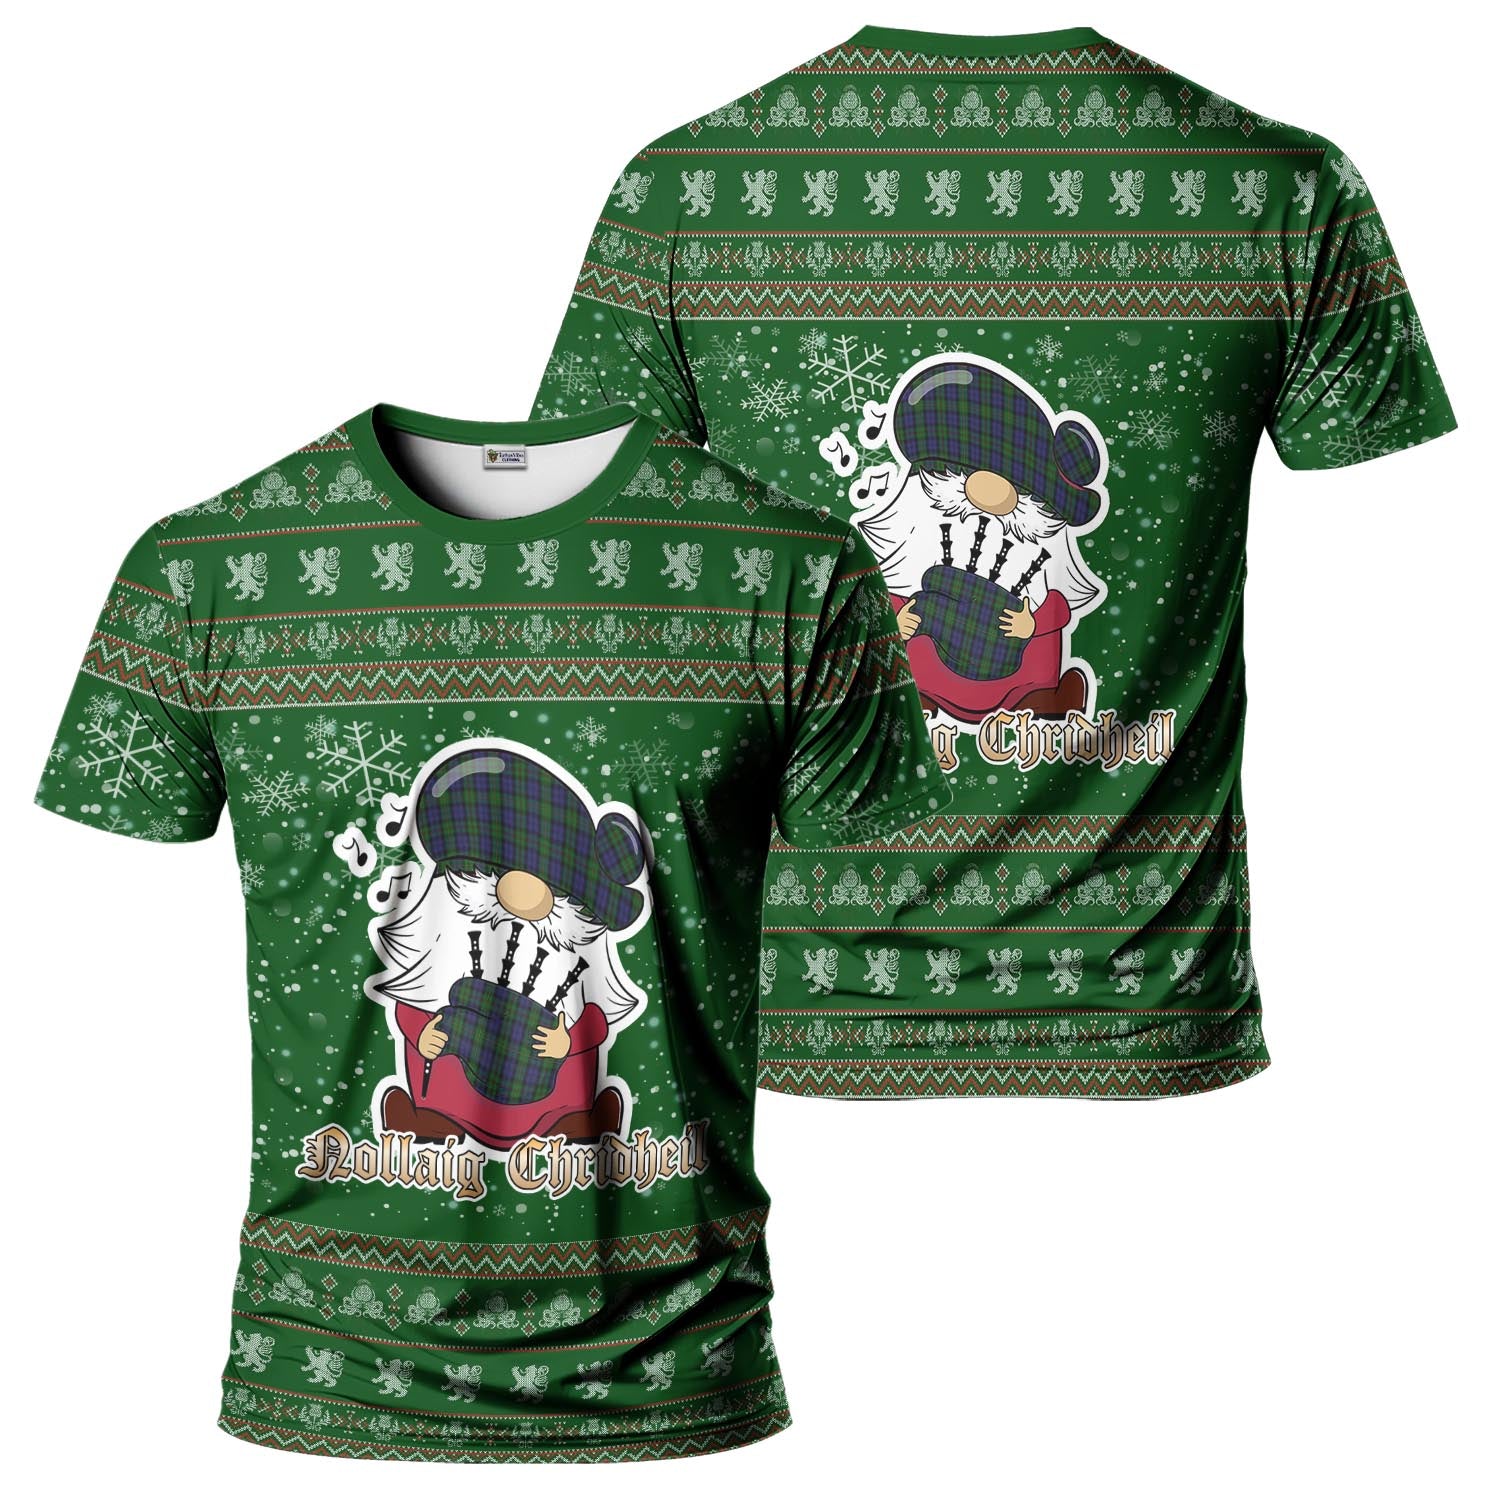 MacEwan Clan Christmas Family T-Shirt with Funny Gnome Playing Bagpipes Men's Shirt Green - Tartanvibesclothing